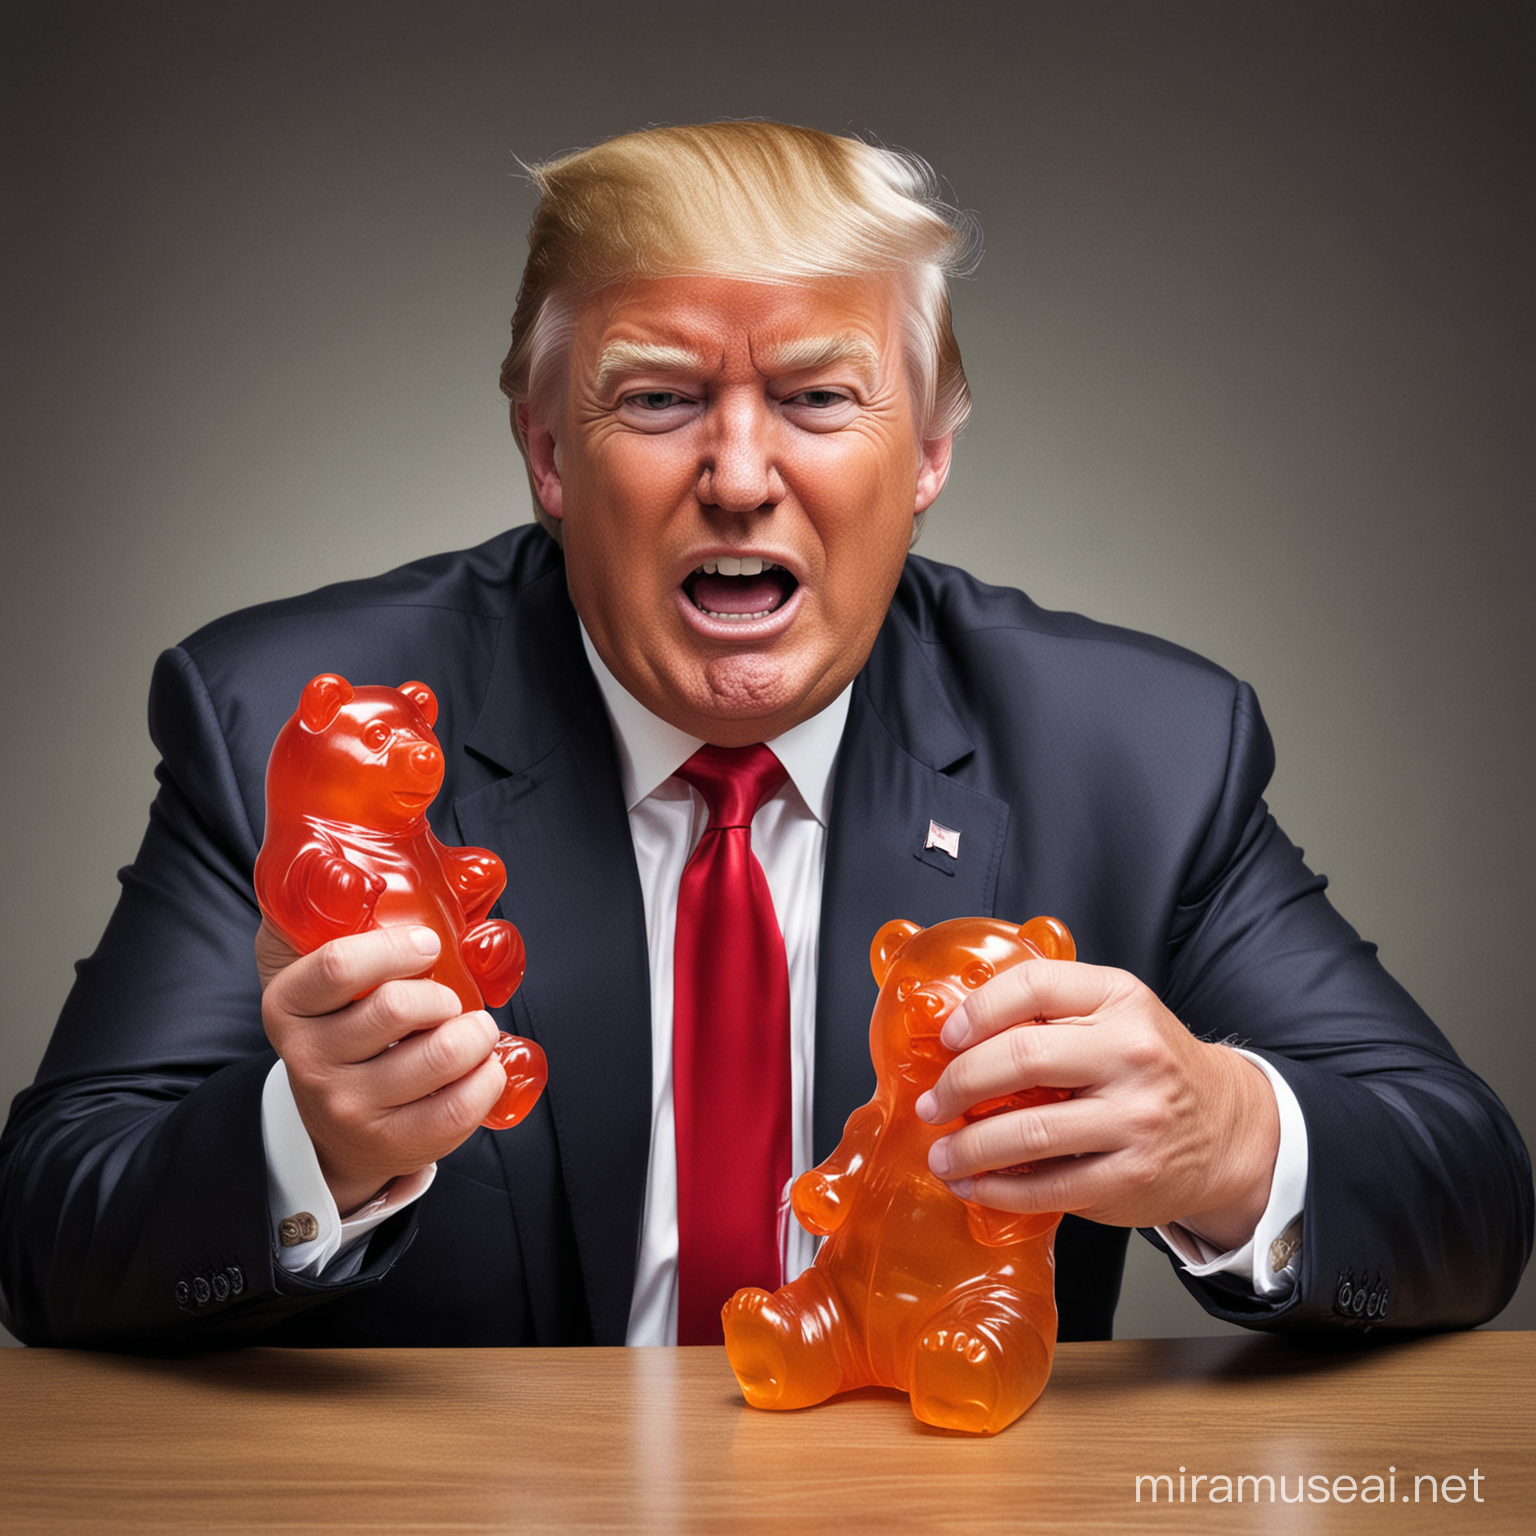 4k Funny meme Donald Trump eat a giant gummy bear 